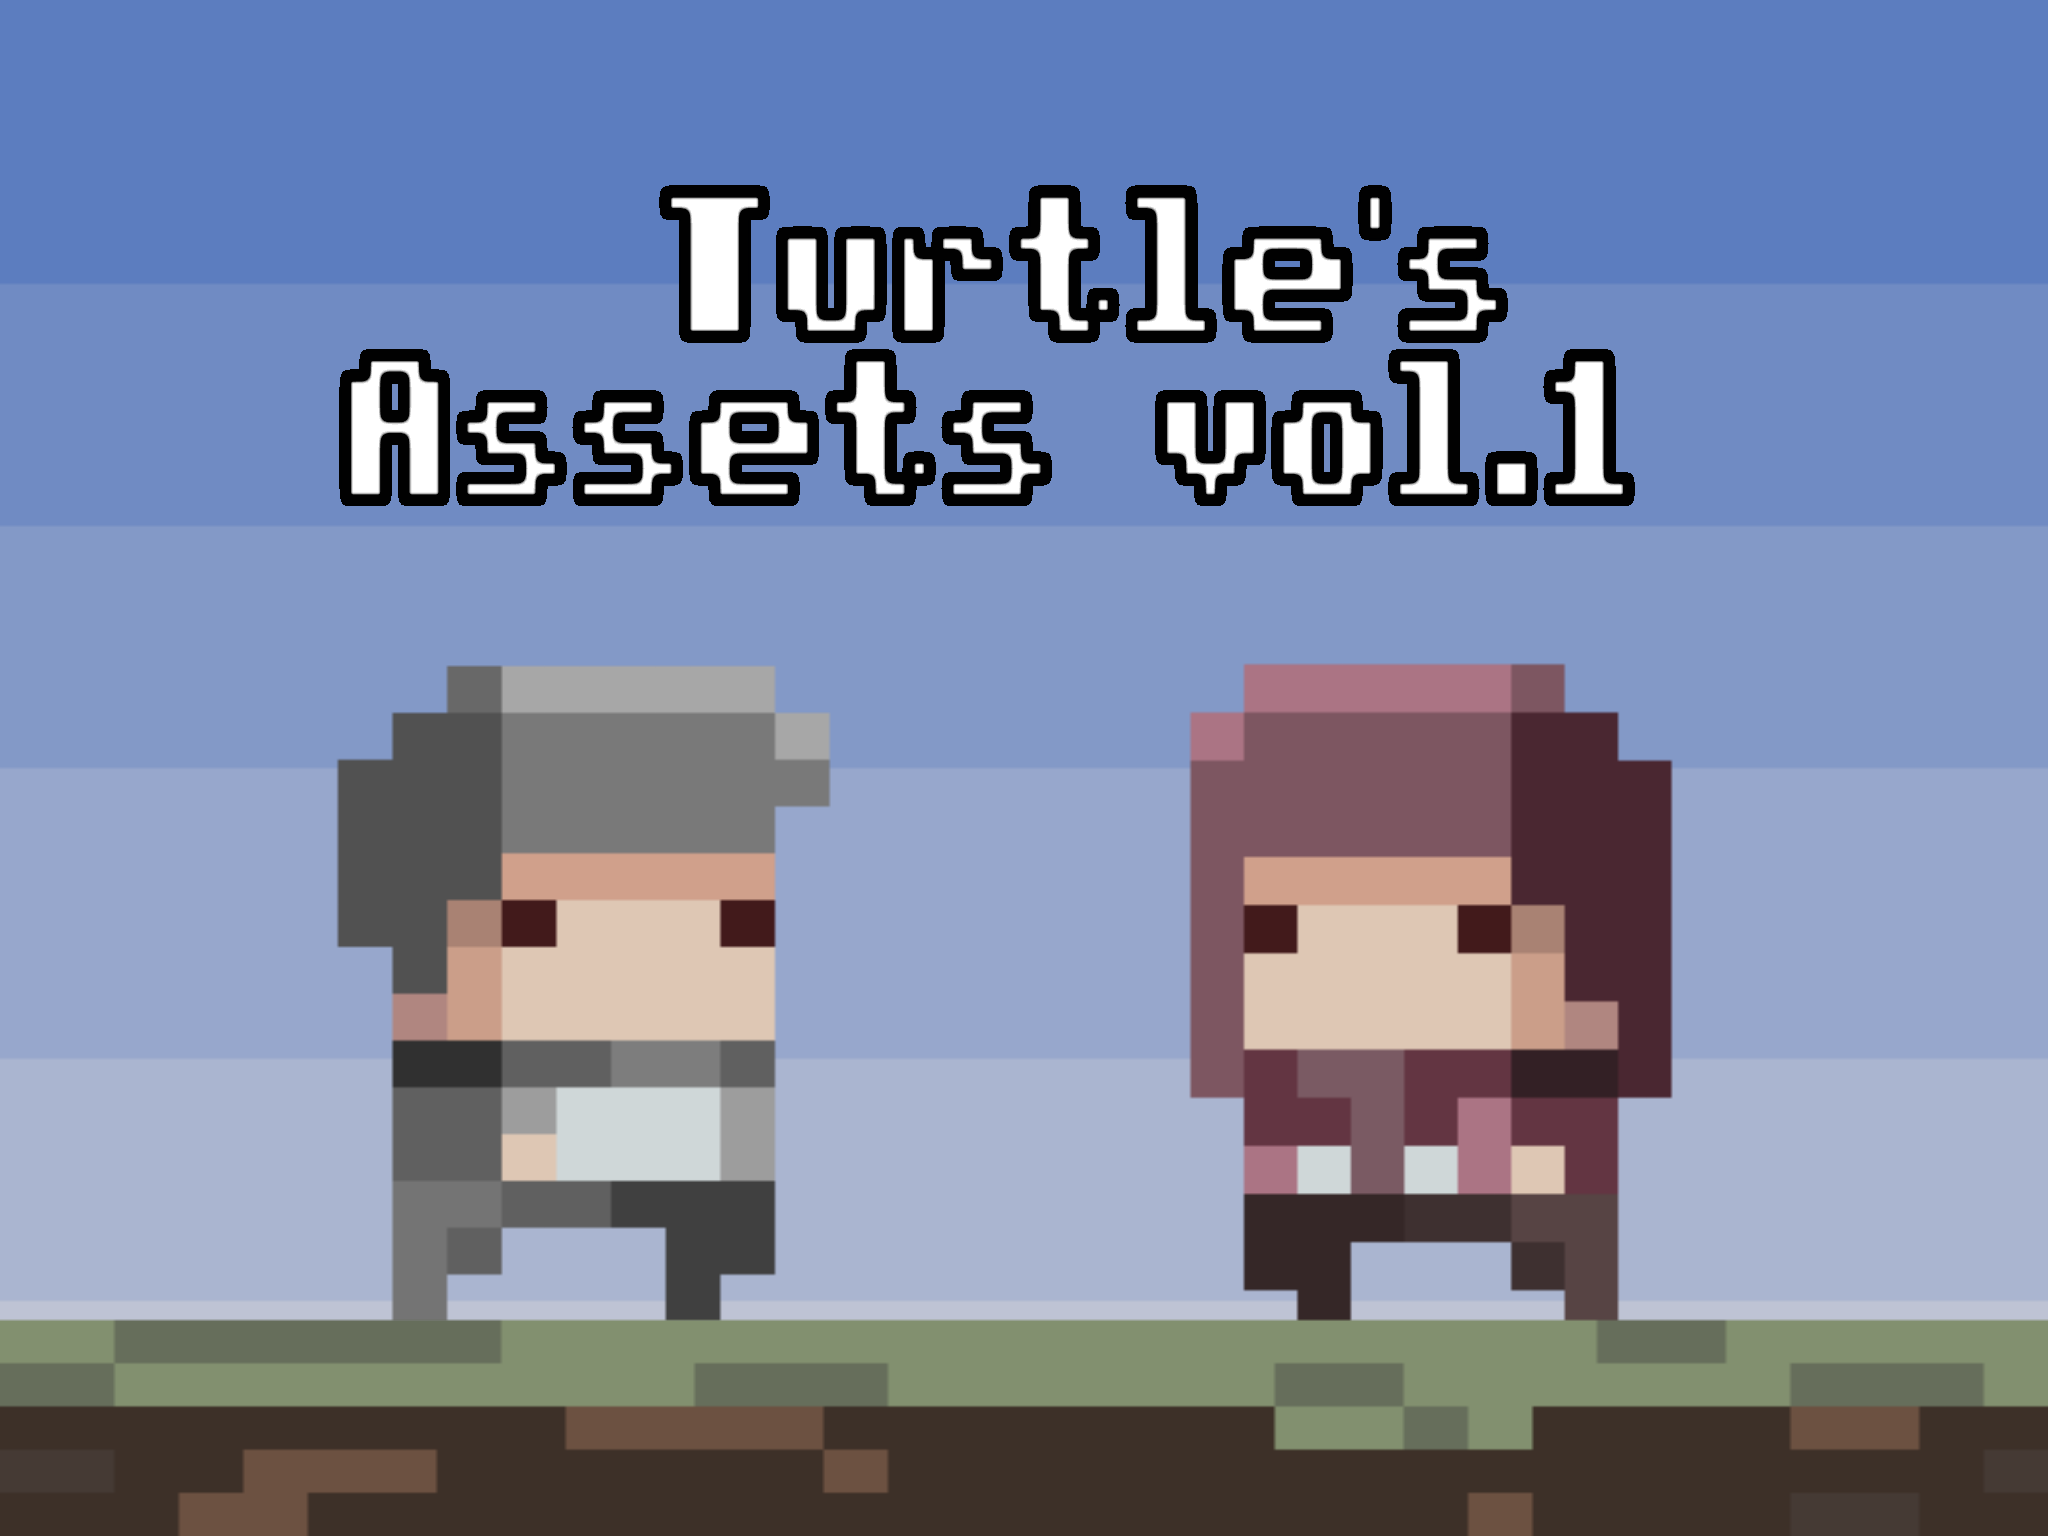 Turtles Assets Vol 1nd